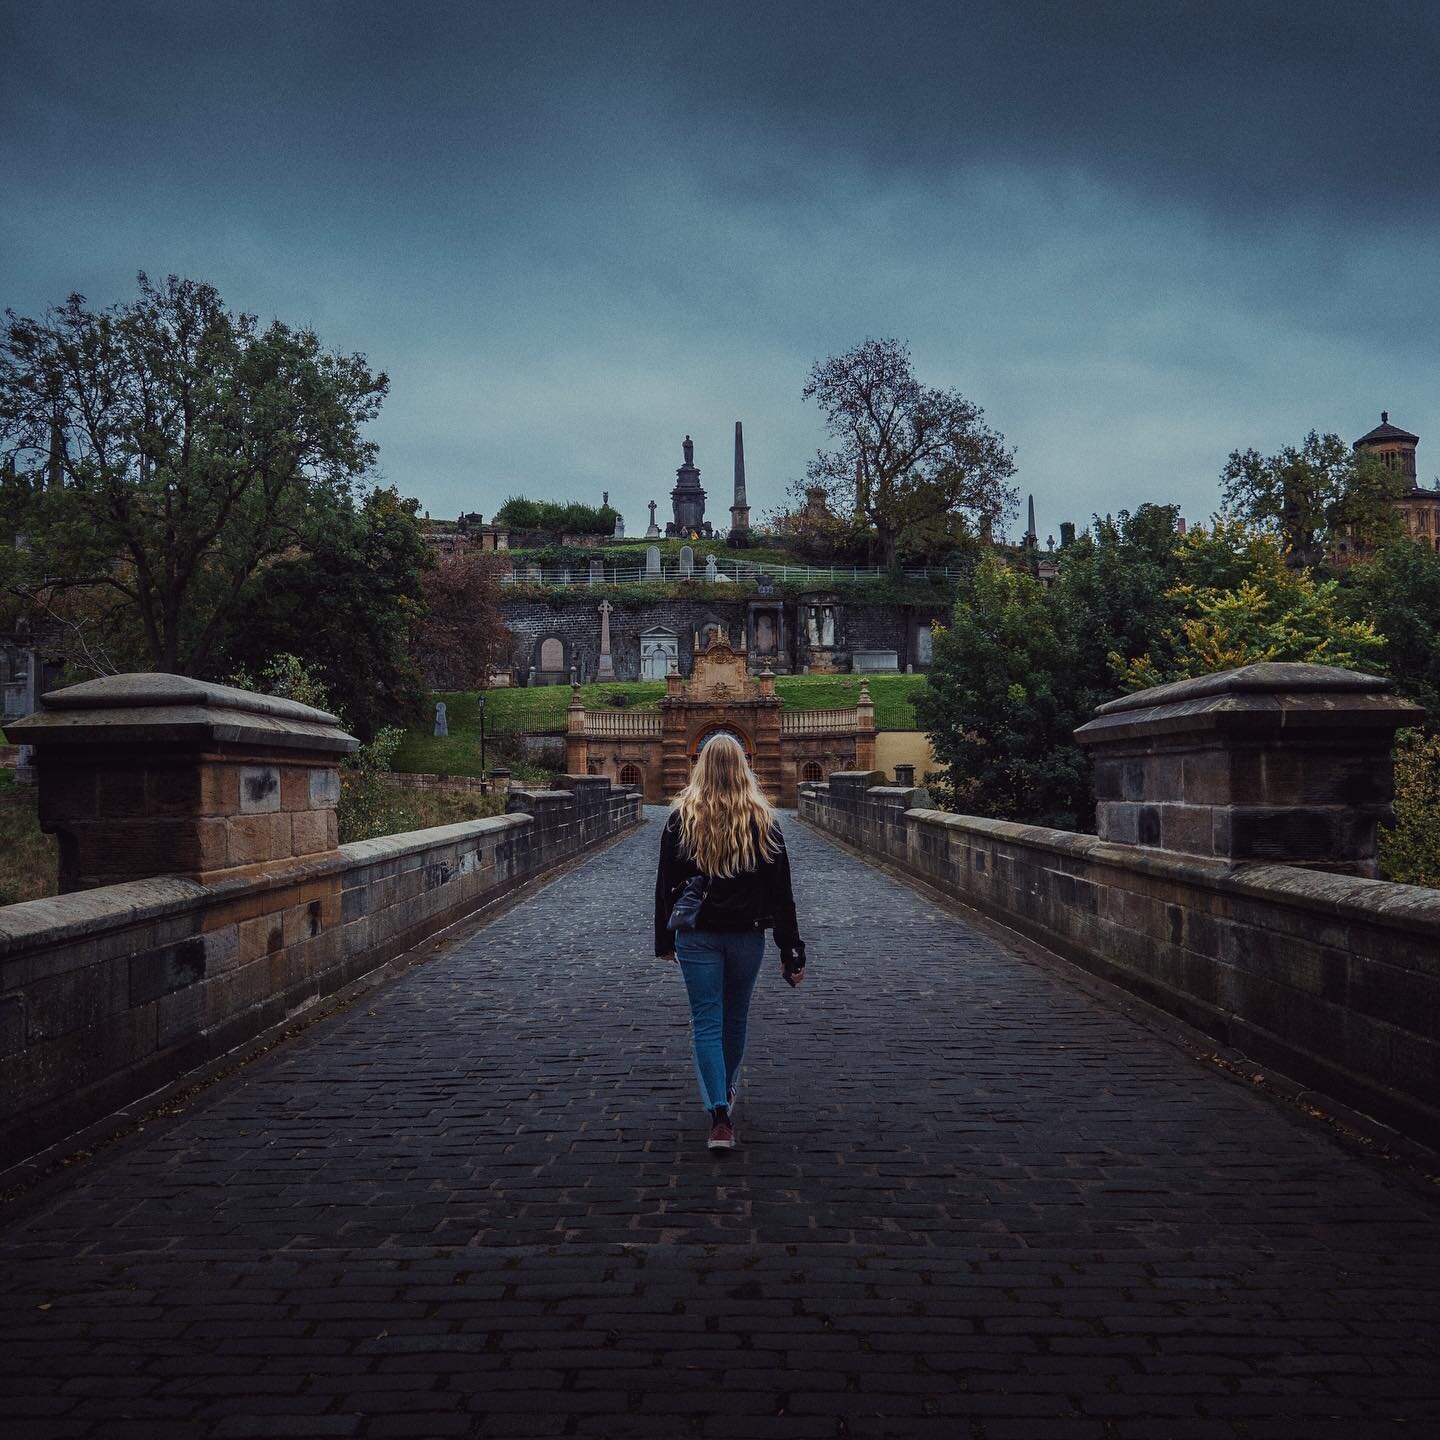 Into the underworld 👻 Glasgow Necropolis is never not quietly creepy 👀 @aliciakarnert 

#jmsfilms #photography #moody #moodygrams #peoplescreatives #exploretocreate #creative #lightroom #minimalism #symmetry #lumixuk #glasgow #scotland #photo #phot